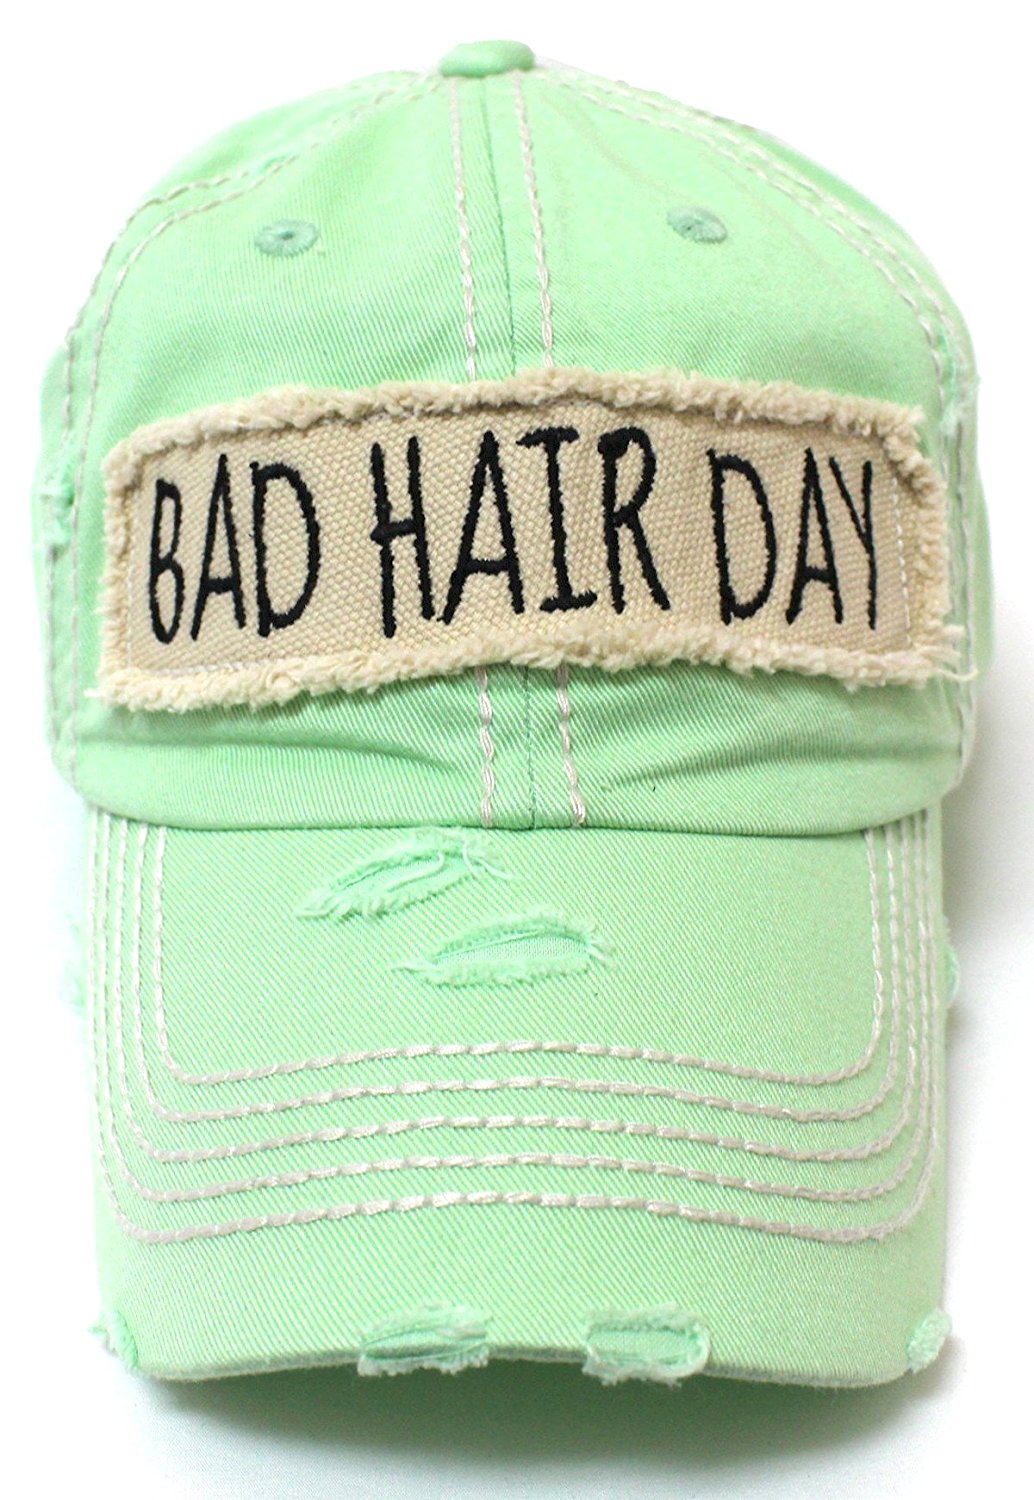 CAPS 'N VINTAGE Bad Hair Day Patch Embroidery Distressed Baseball Hat - Caps 'N Vintage 